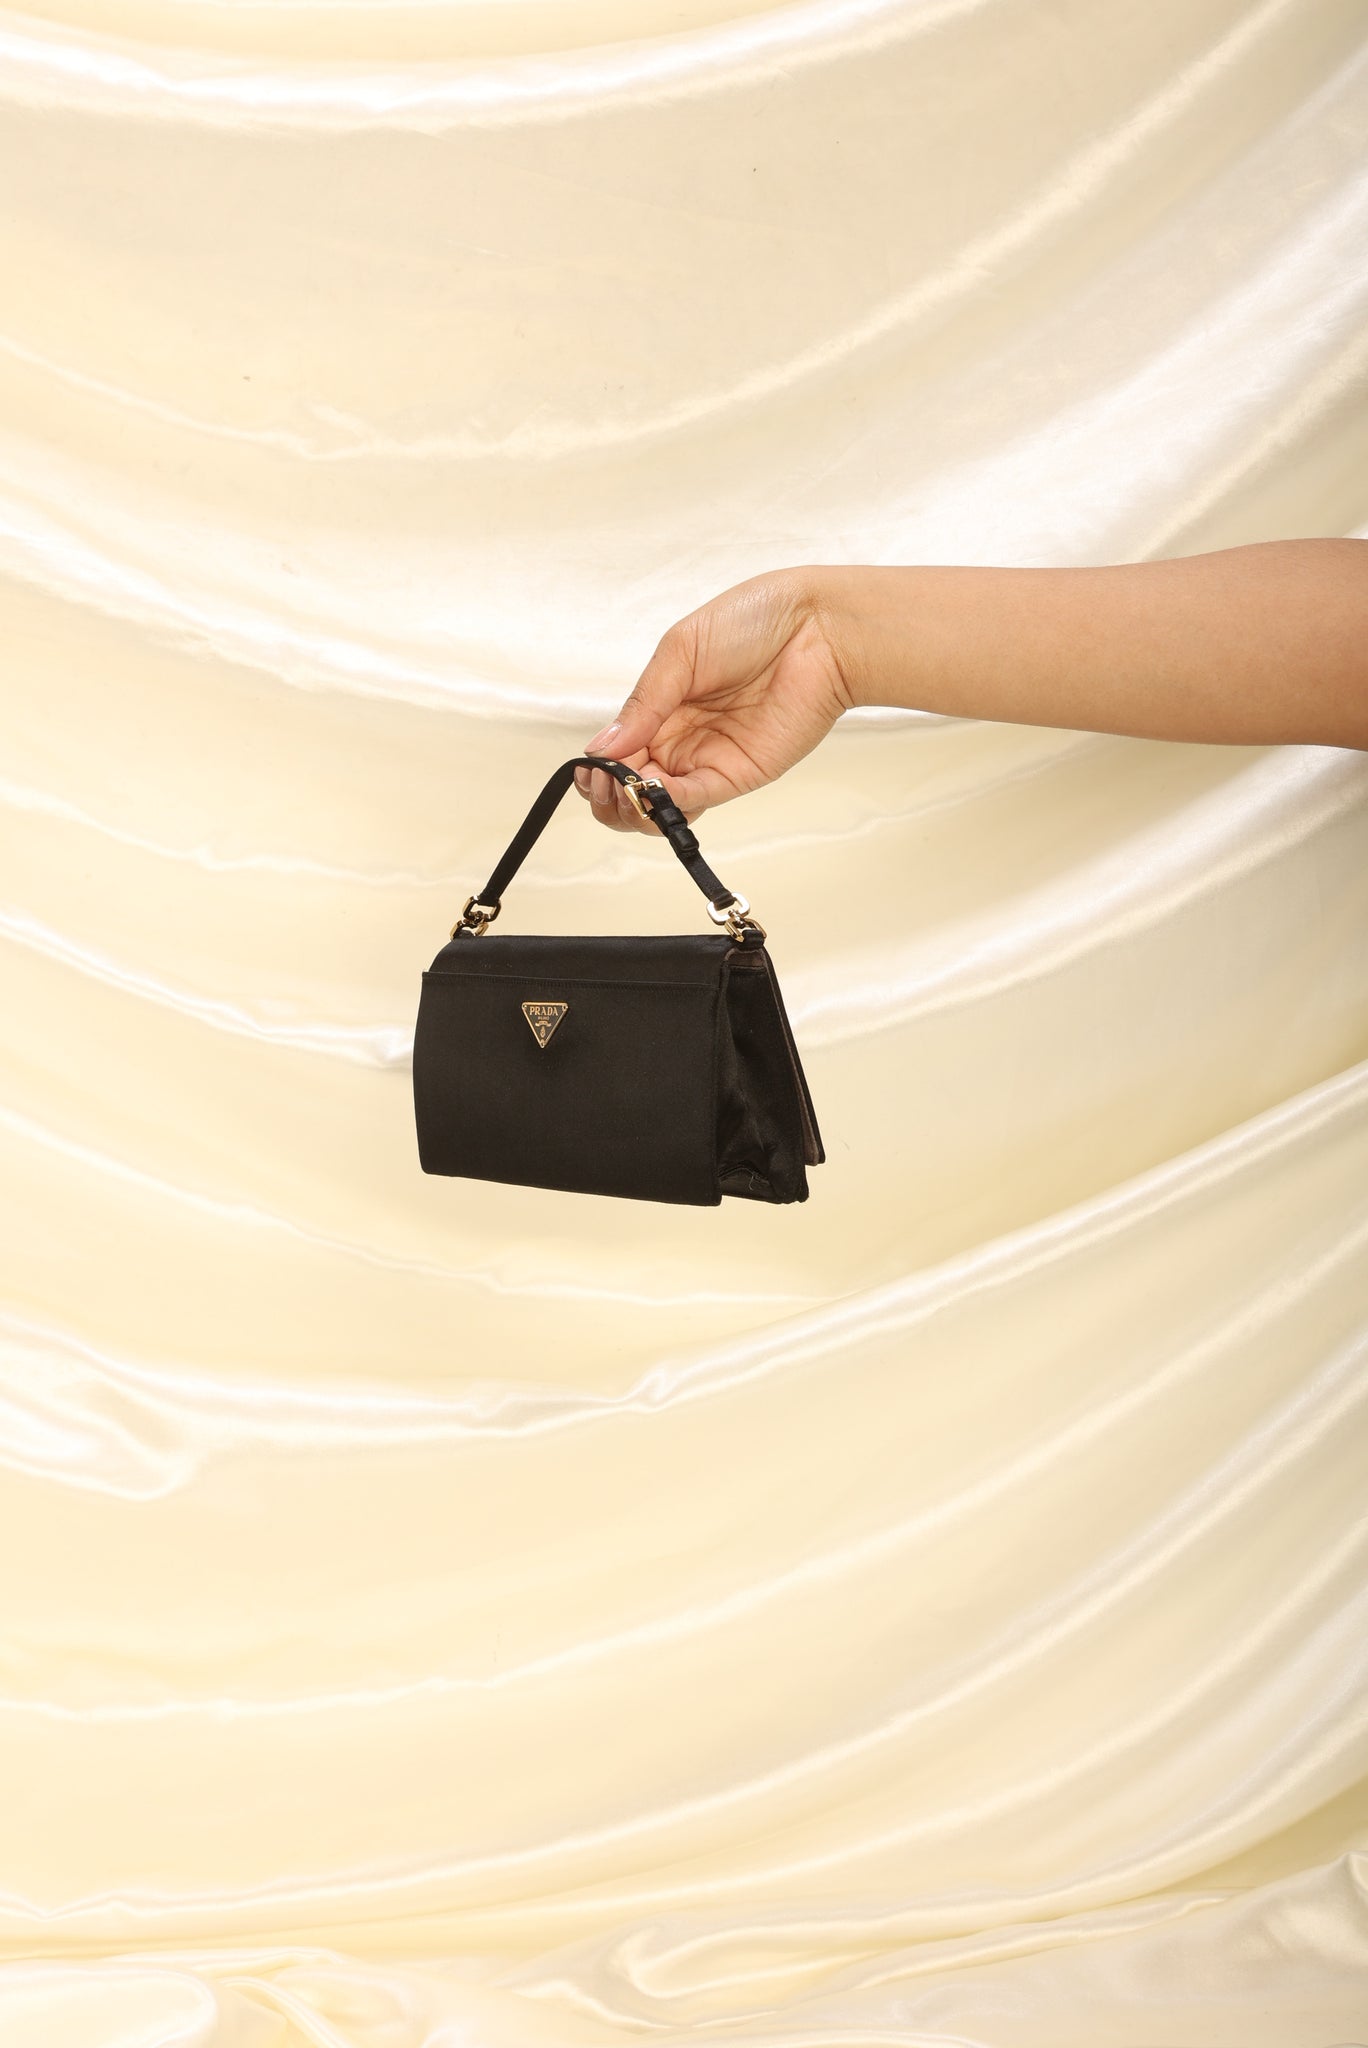 Prada Black Satin Transparent Mini Bag Rare